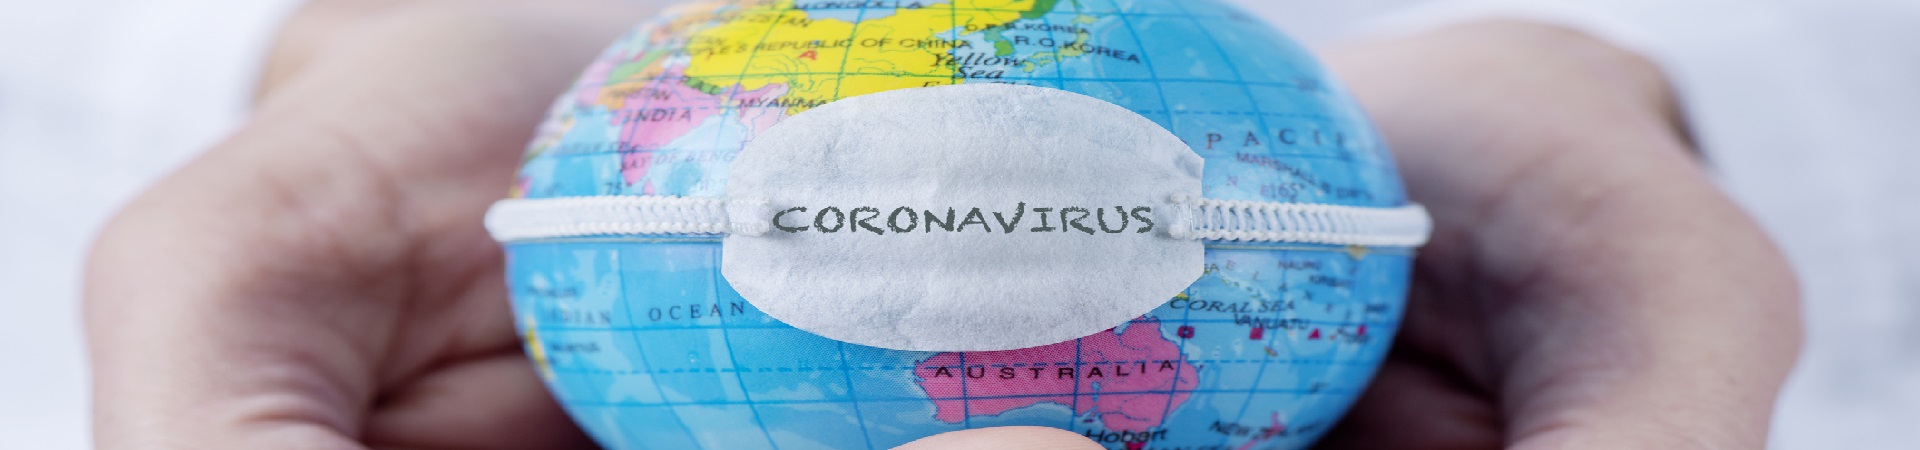 coronavirus-mededeling-2.jpg